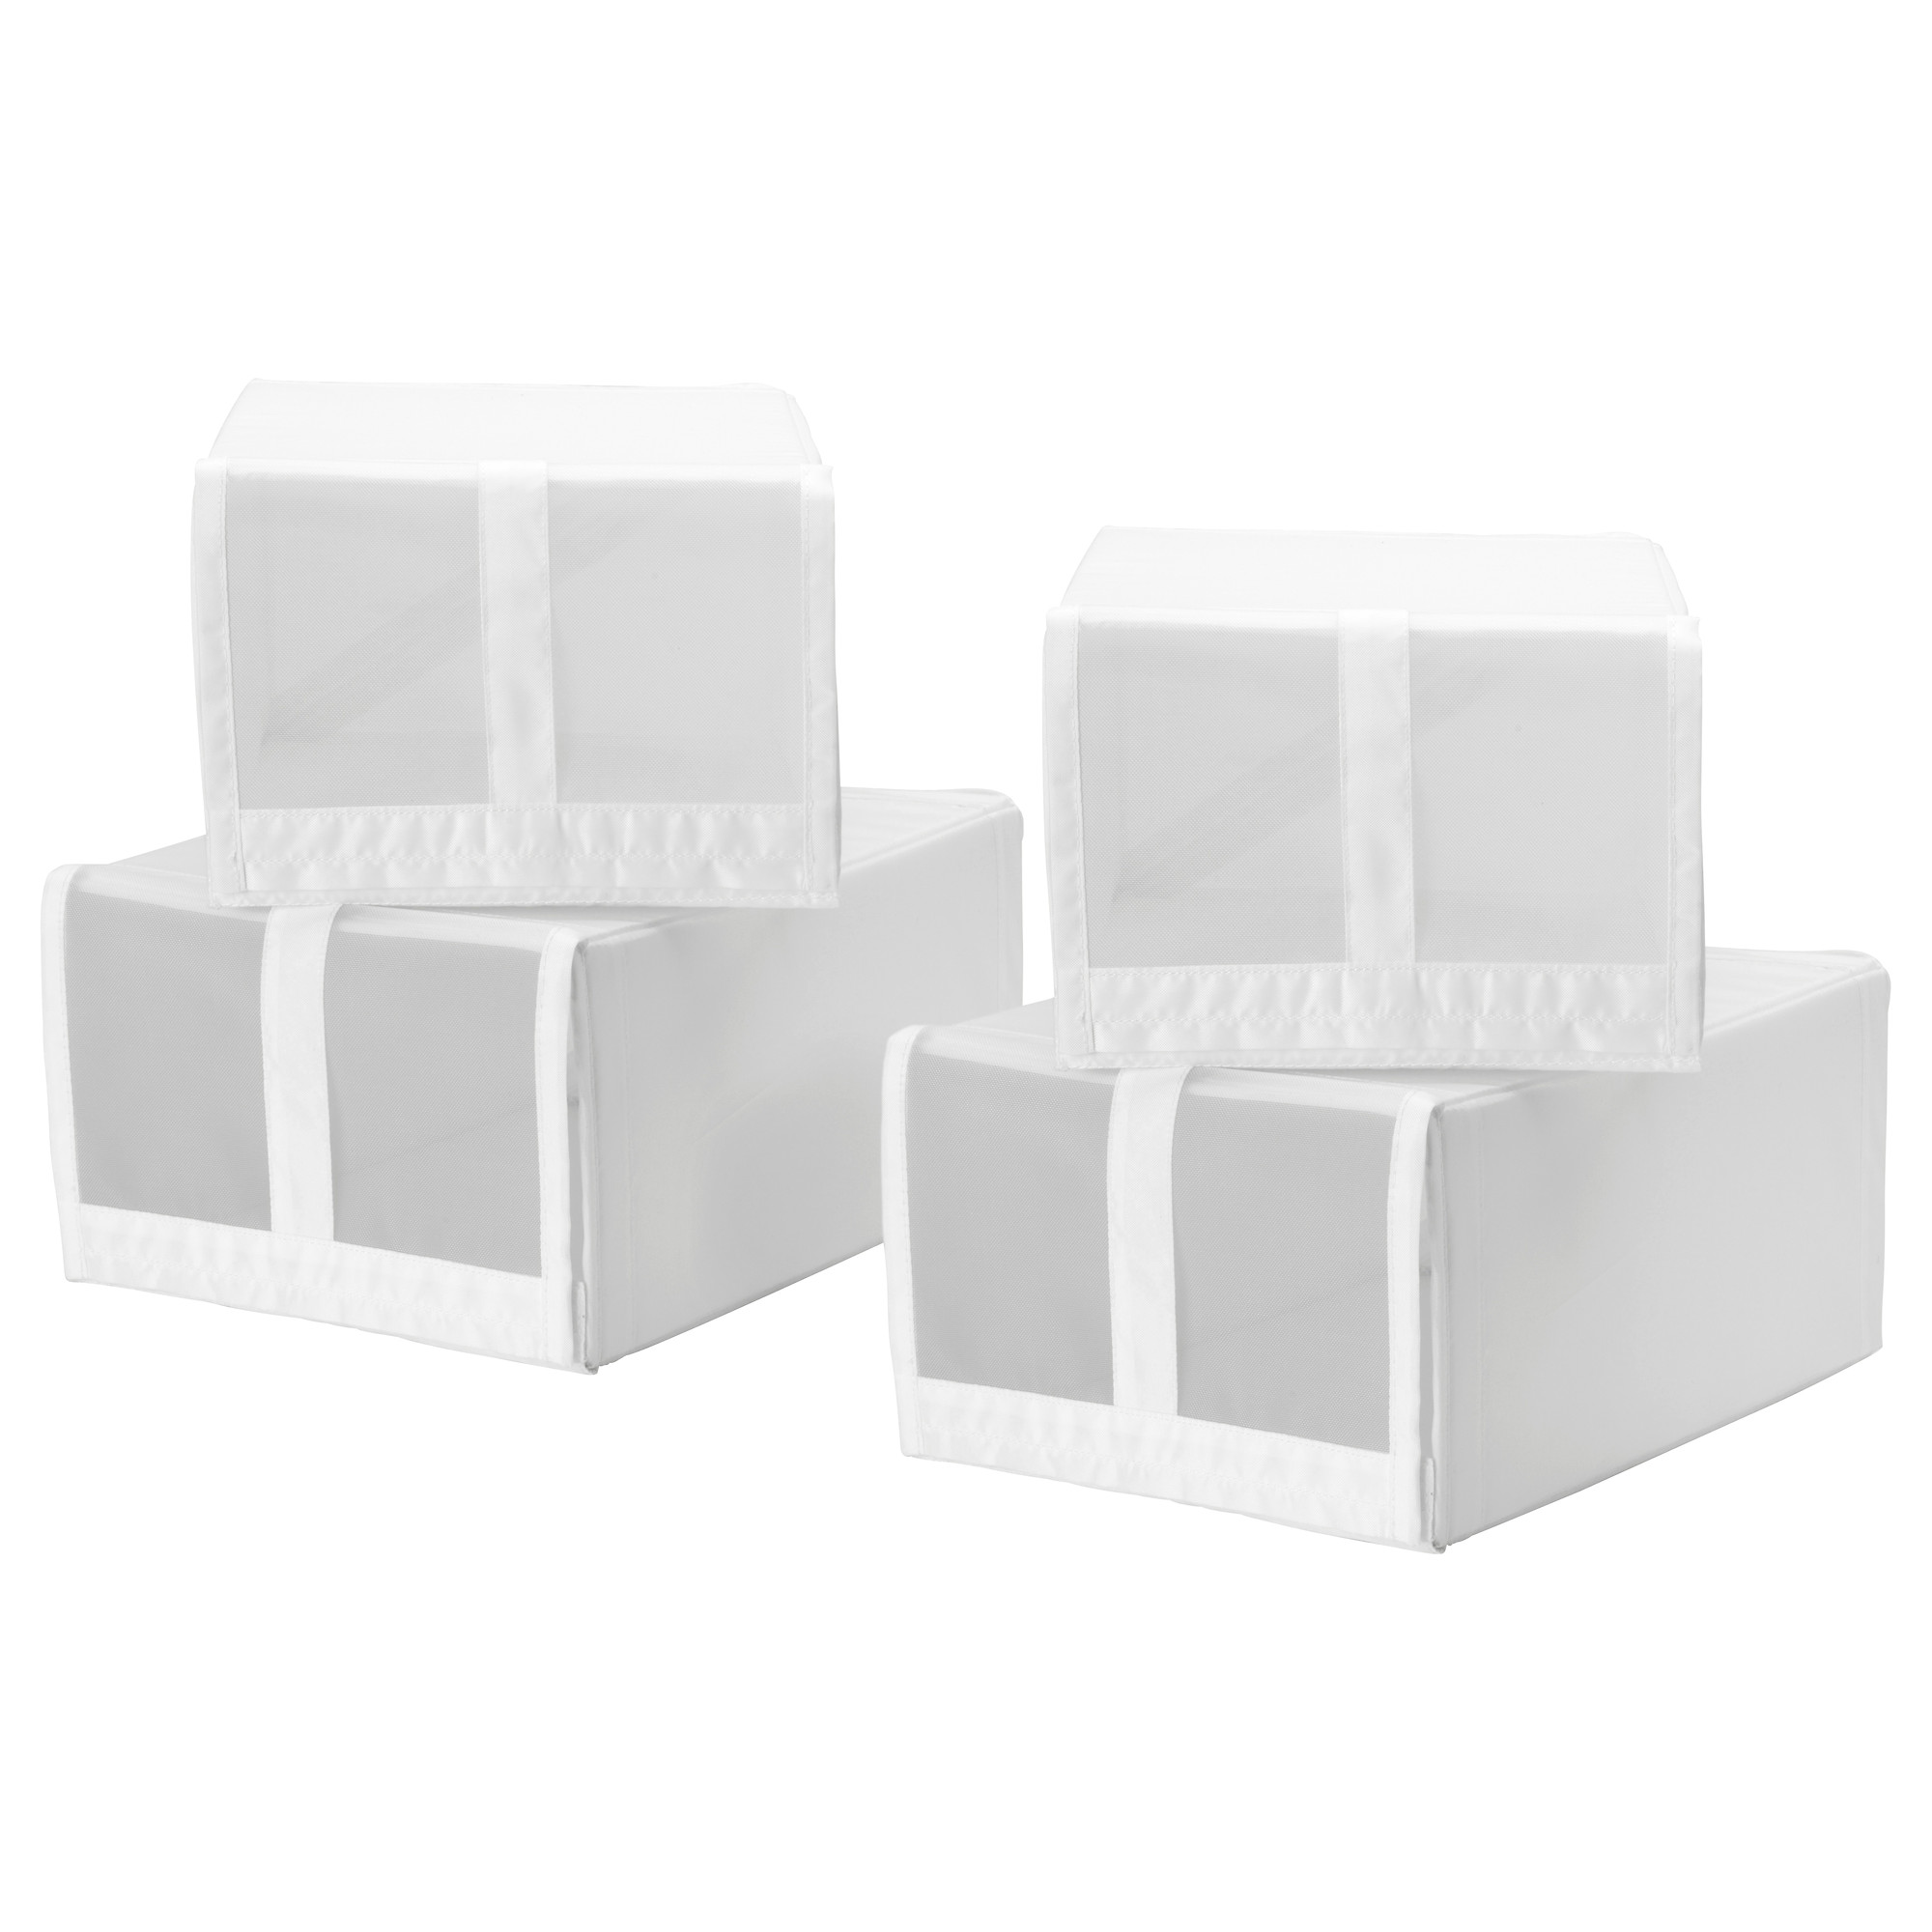 SKUBB - shoe box, white | IKEA Hong 